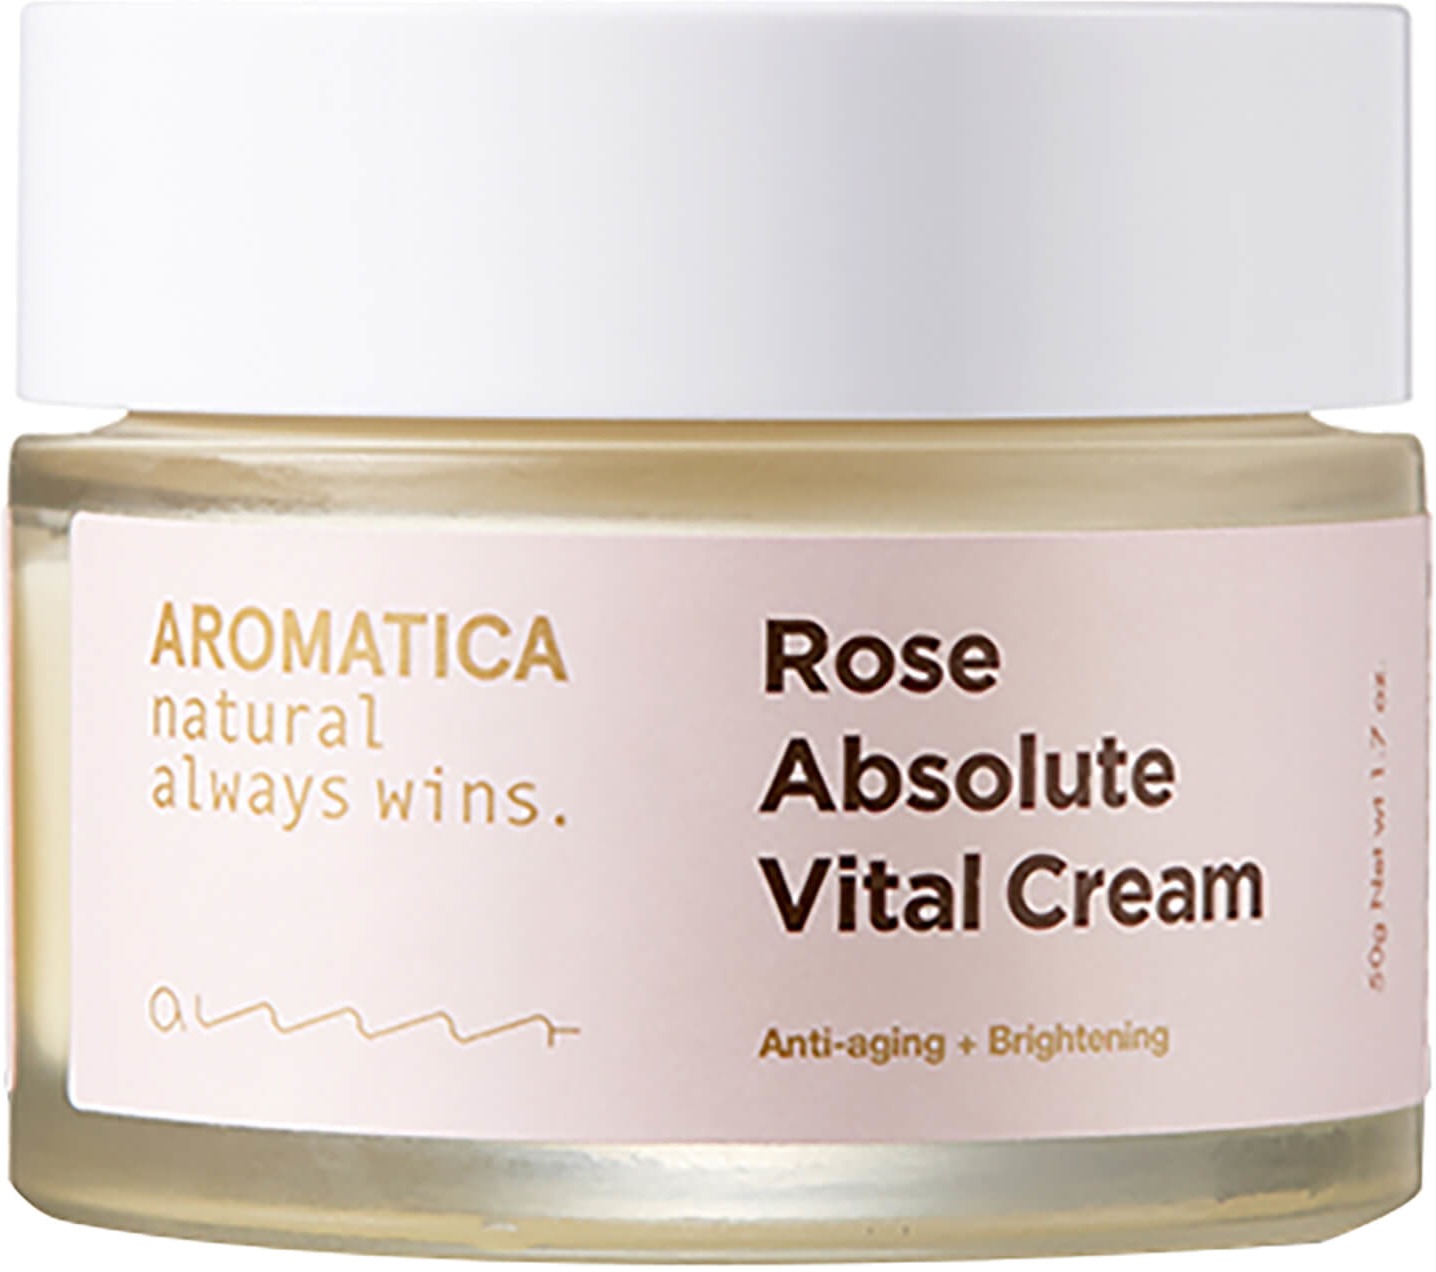 Aromatica Rose Absolute Vital Cream